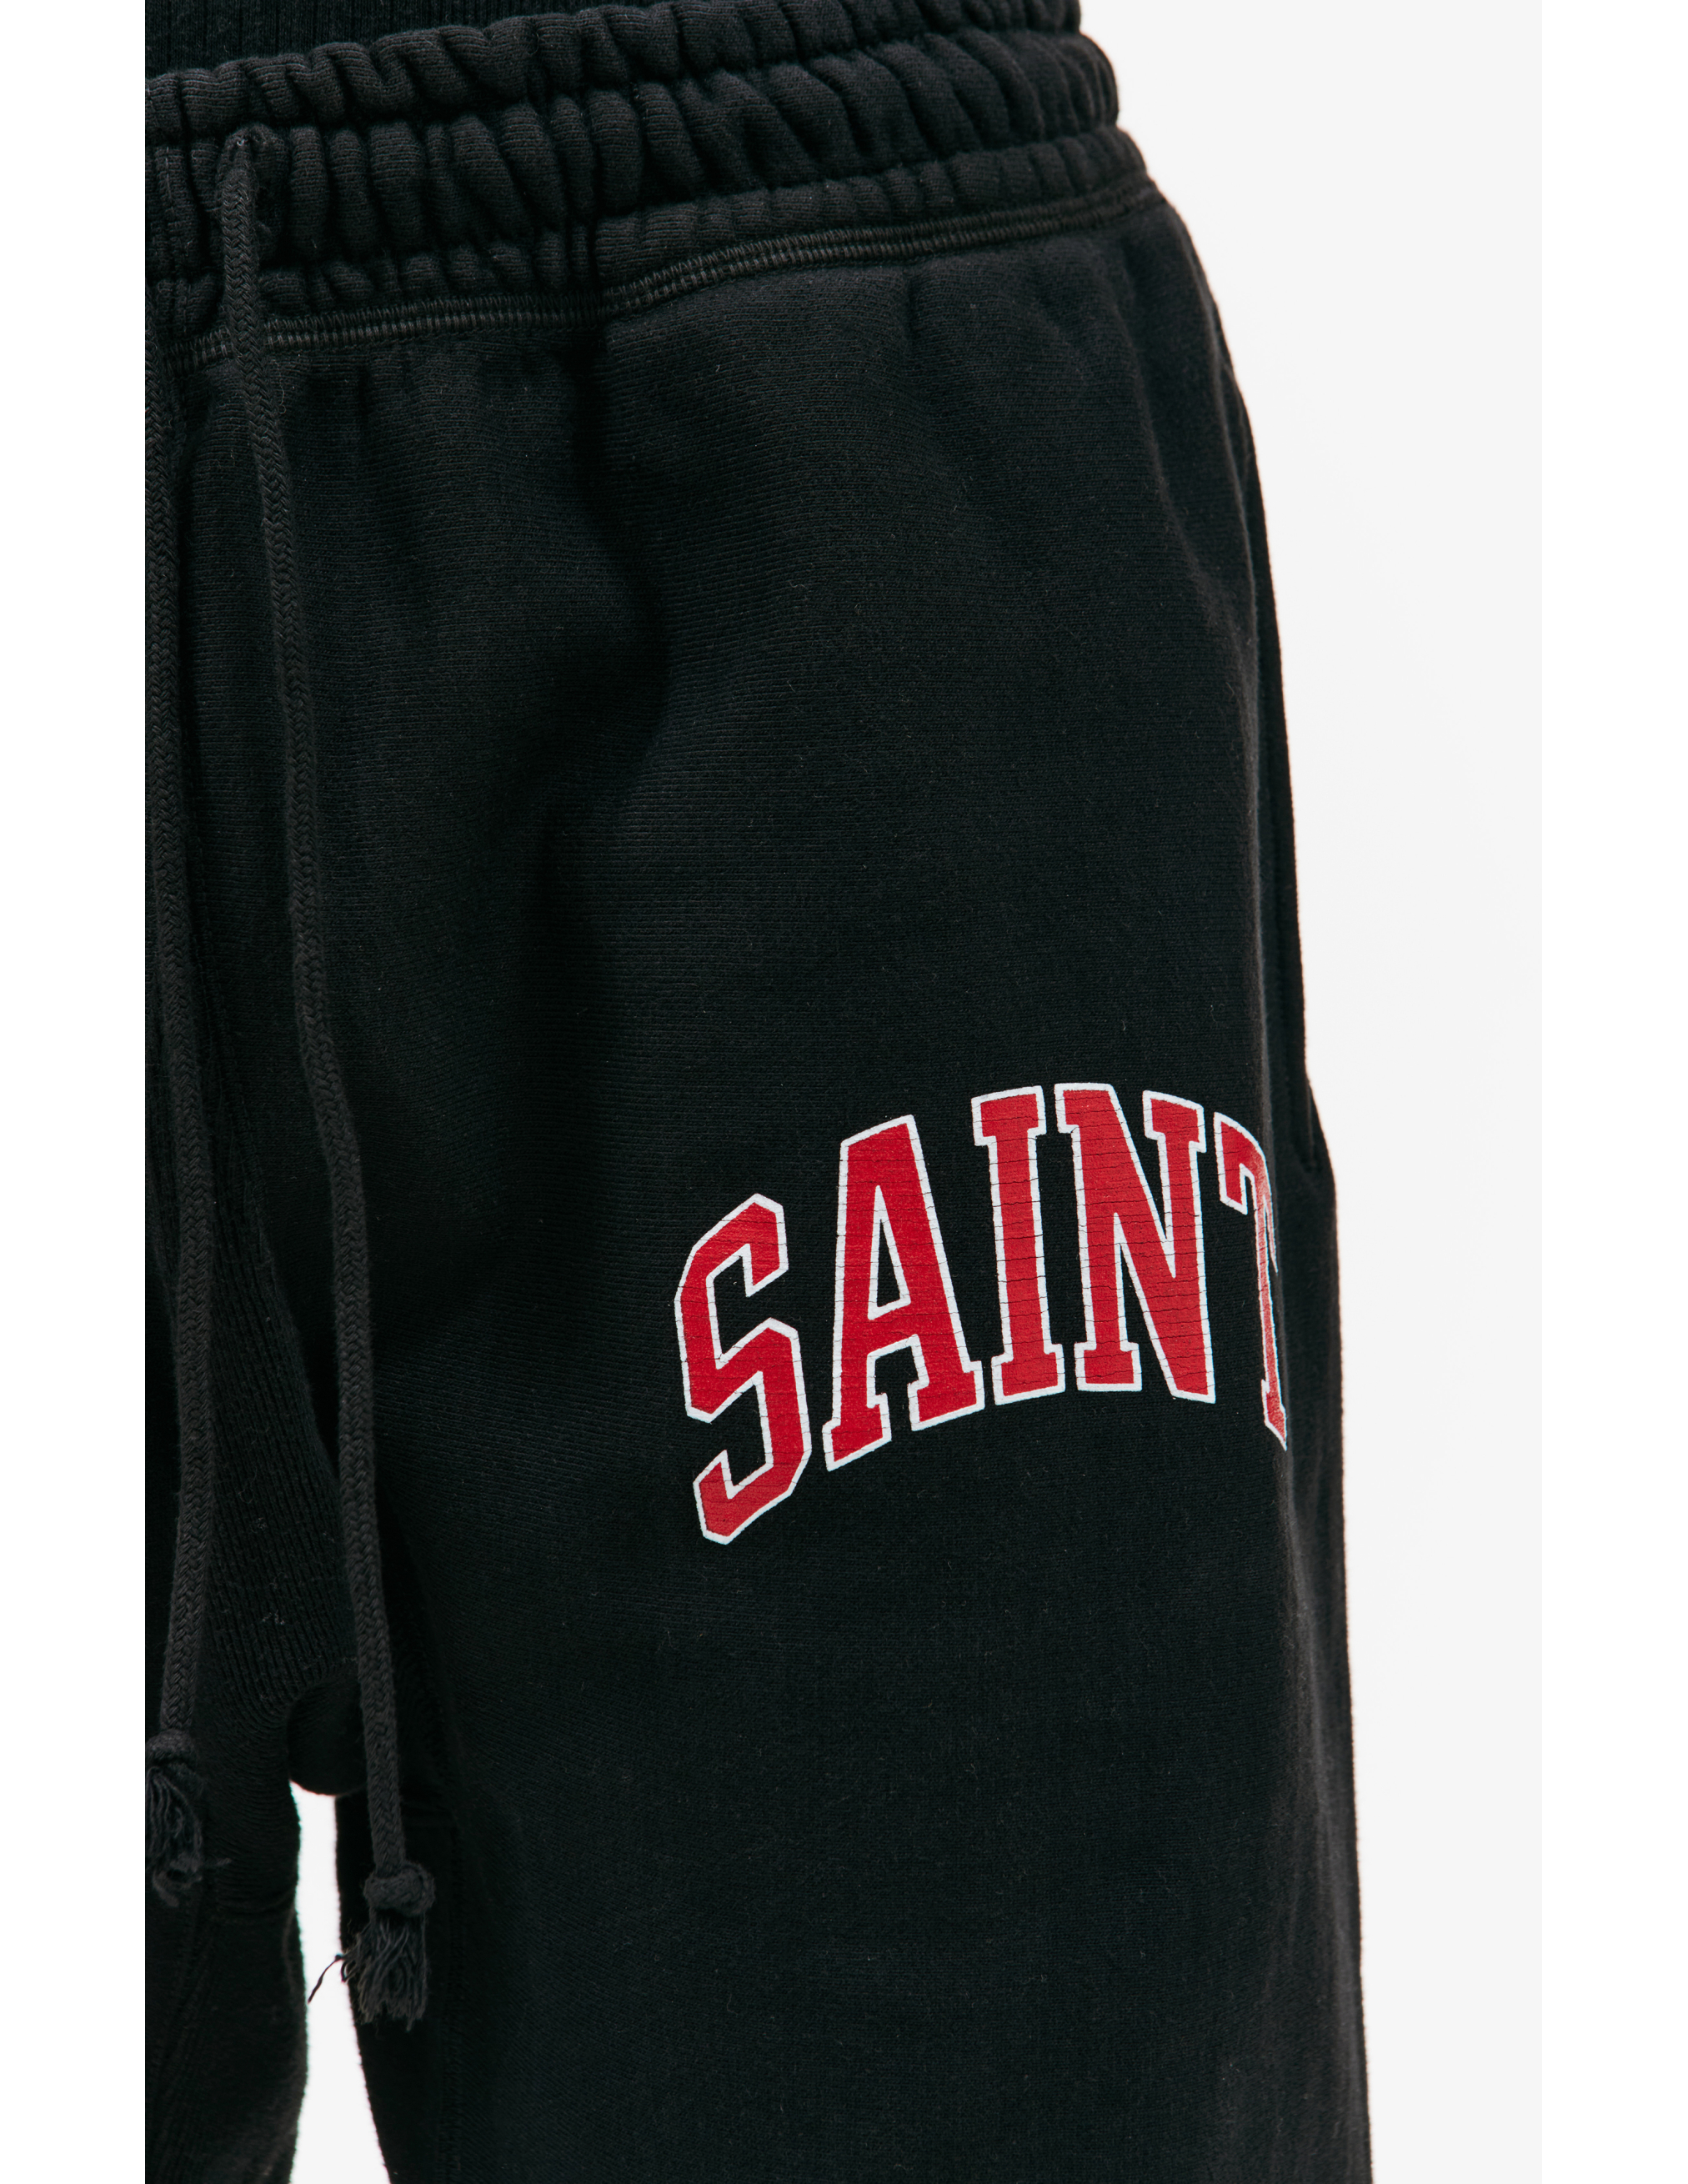 Спортивные брюки с логотипом Saint Michael SM-A23-0000-036, размер M;L;XL - фото 4